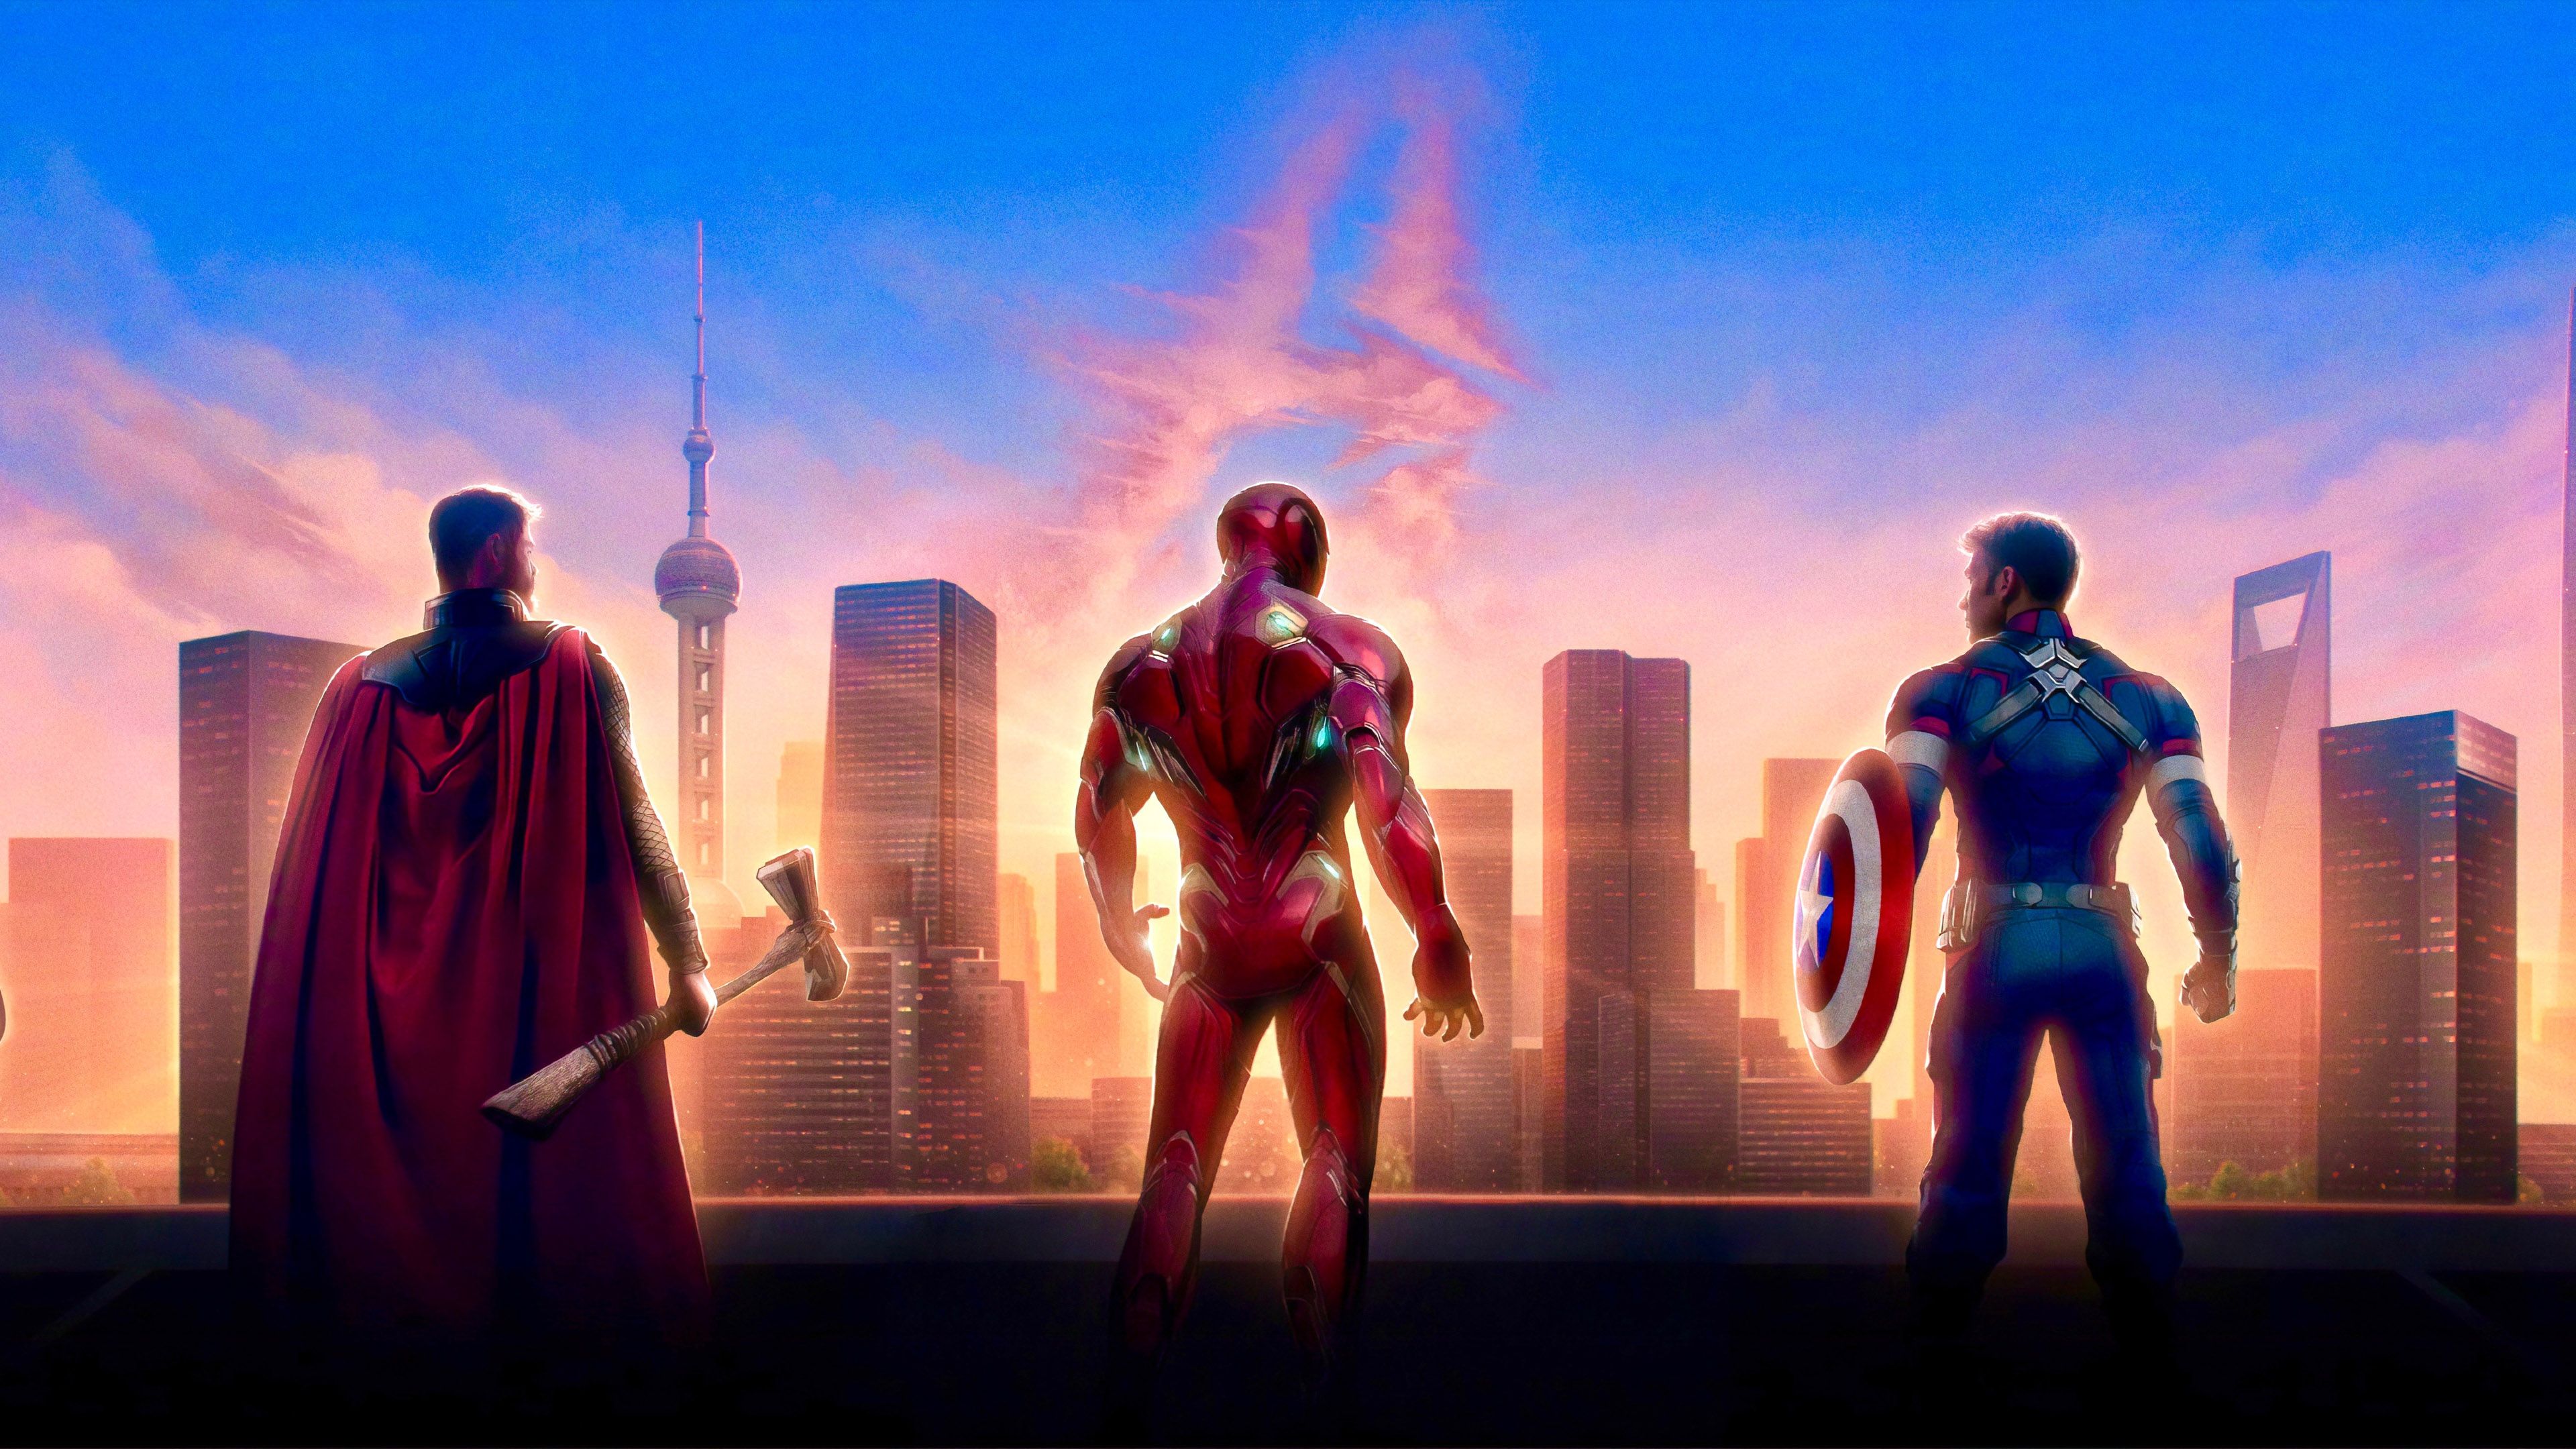 Avengers Endgame America, Iron Man and Thor 4k background image HD wallpaper for desktop. Wallpaper high reso. Avengers, 4k background, Superhero poster